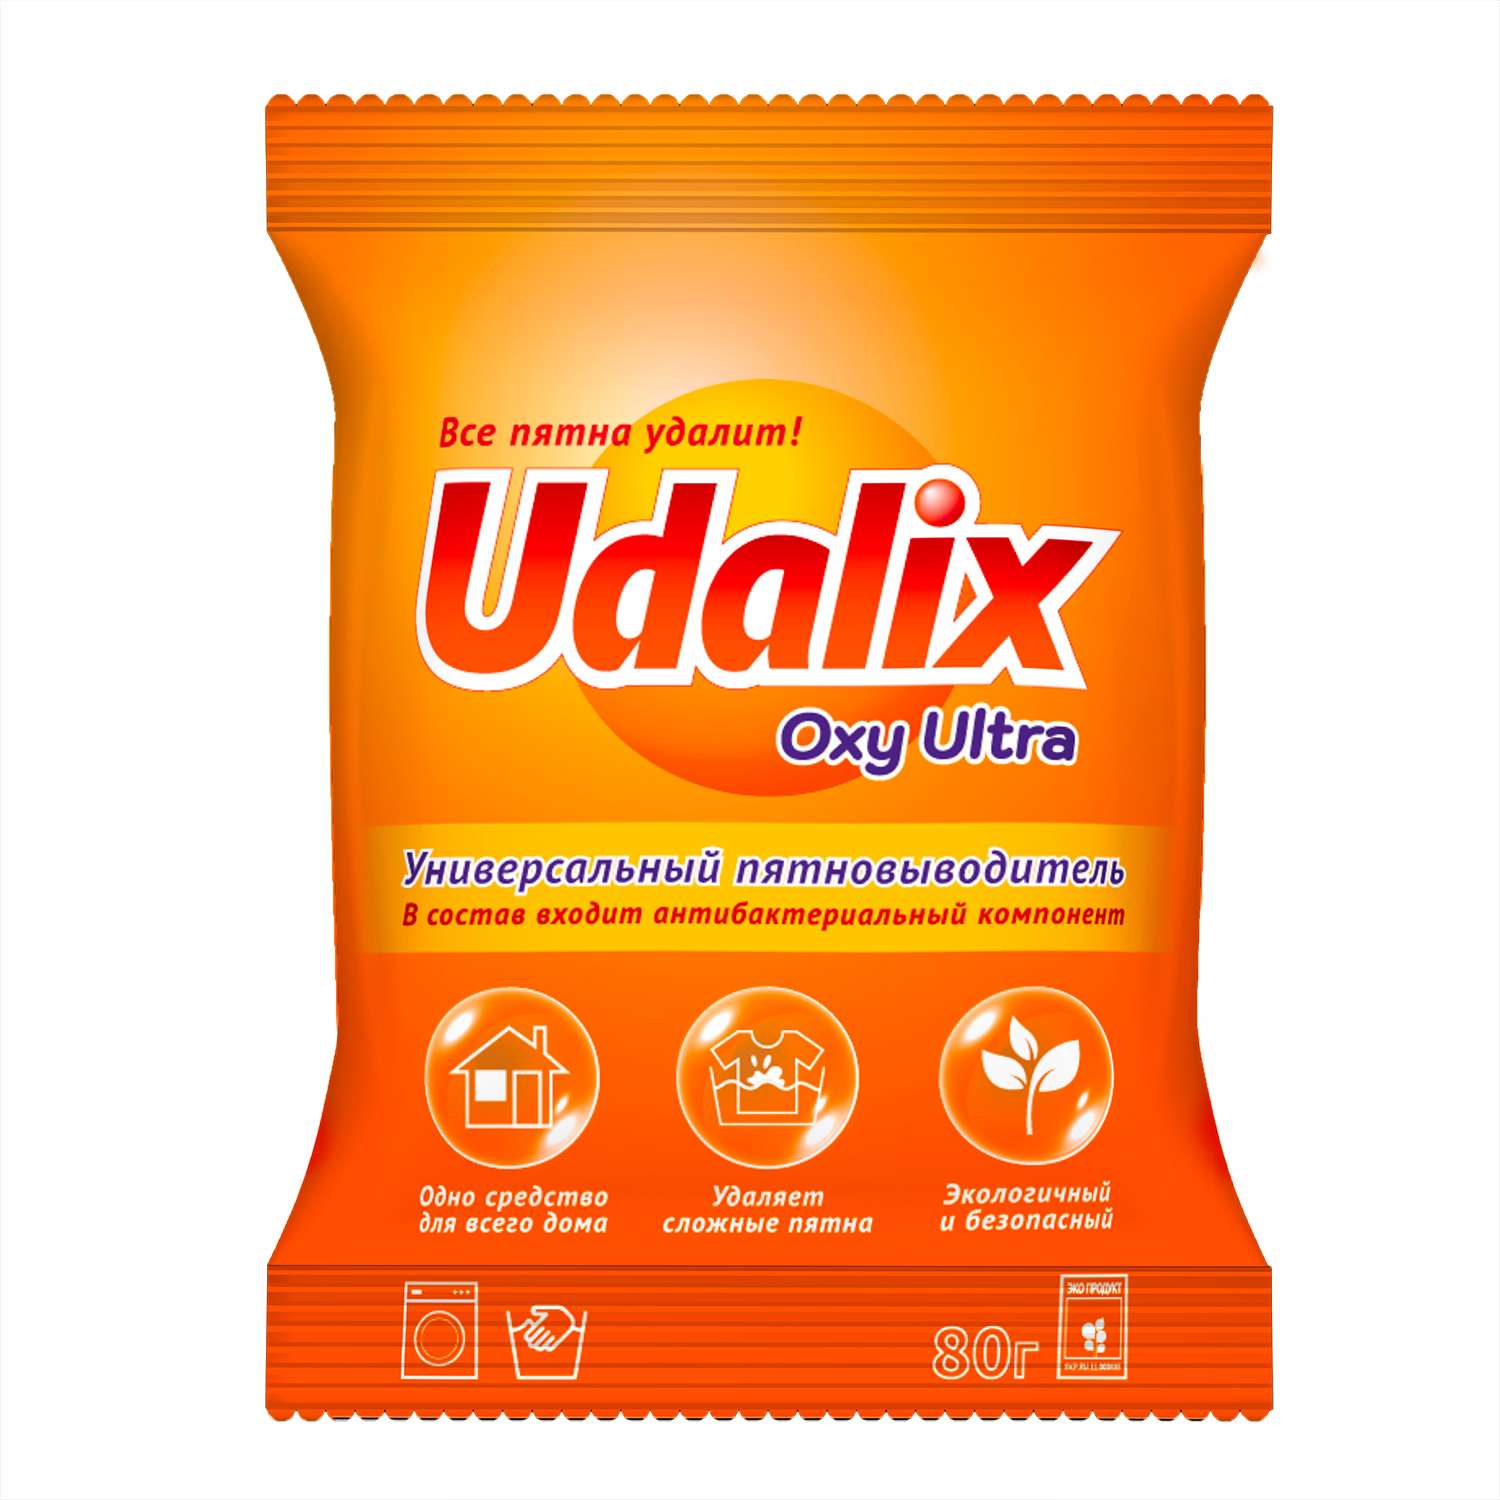 Пятновыводитель Udalix Oxy Ultra 80г - фото 1